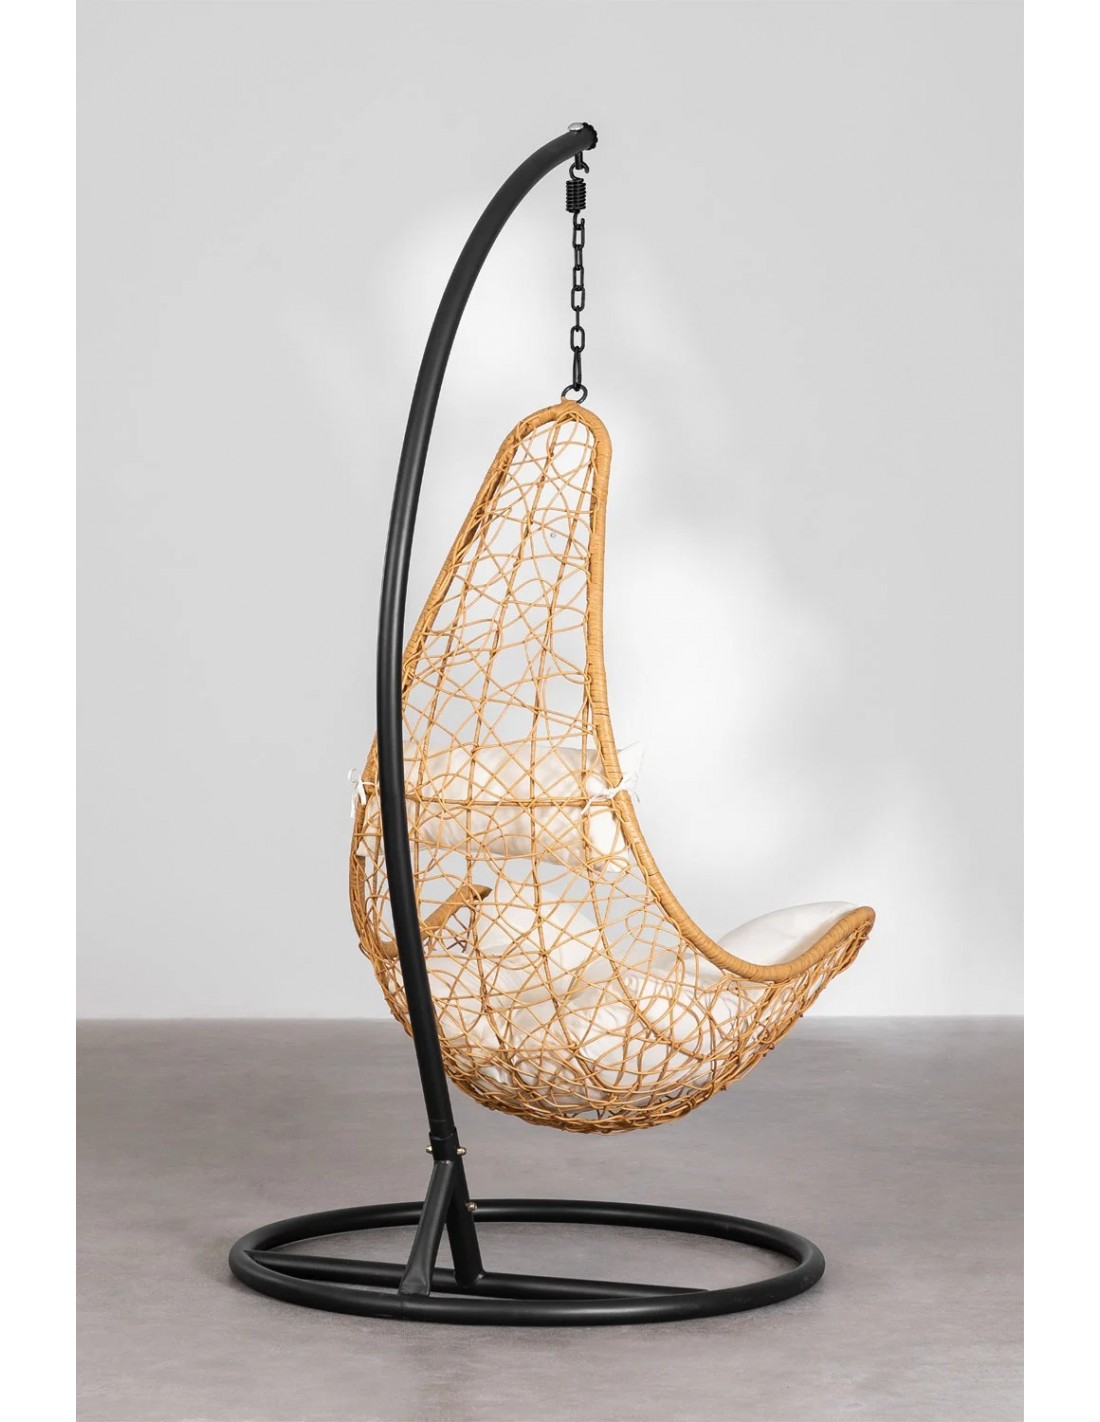 Swing Chair: fauteuil suspendus